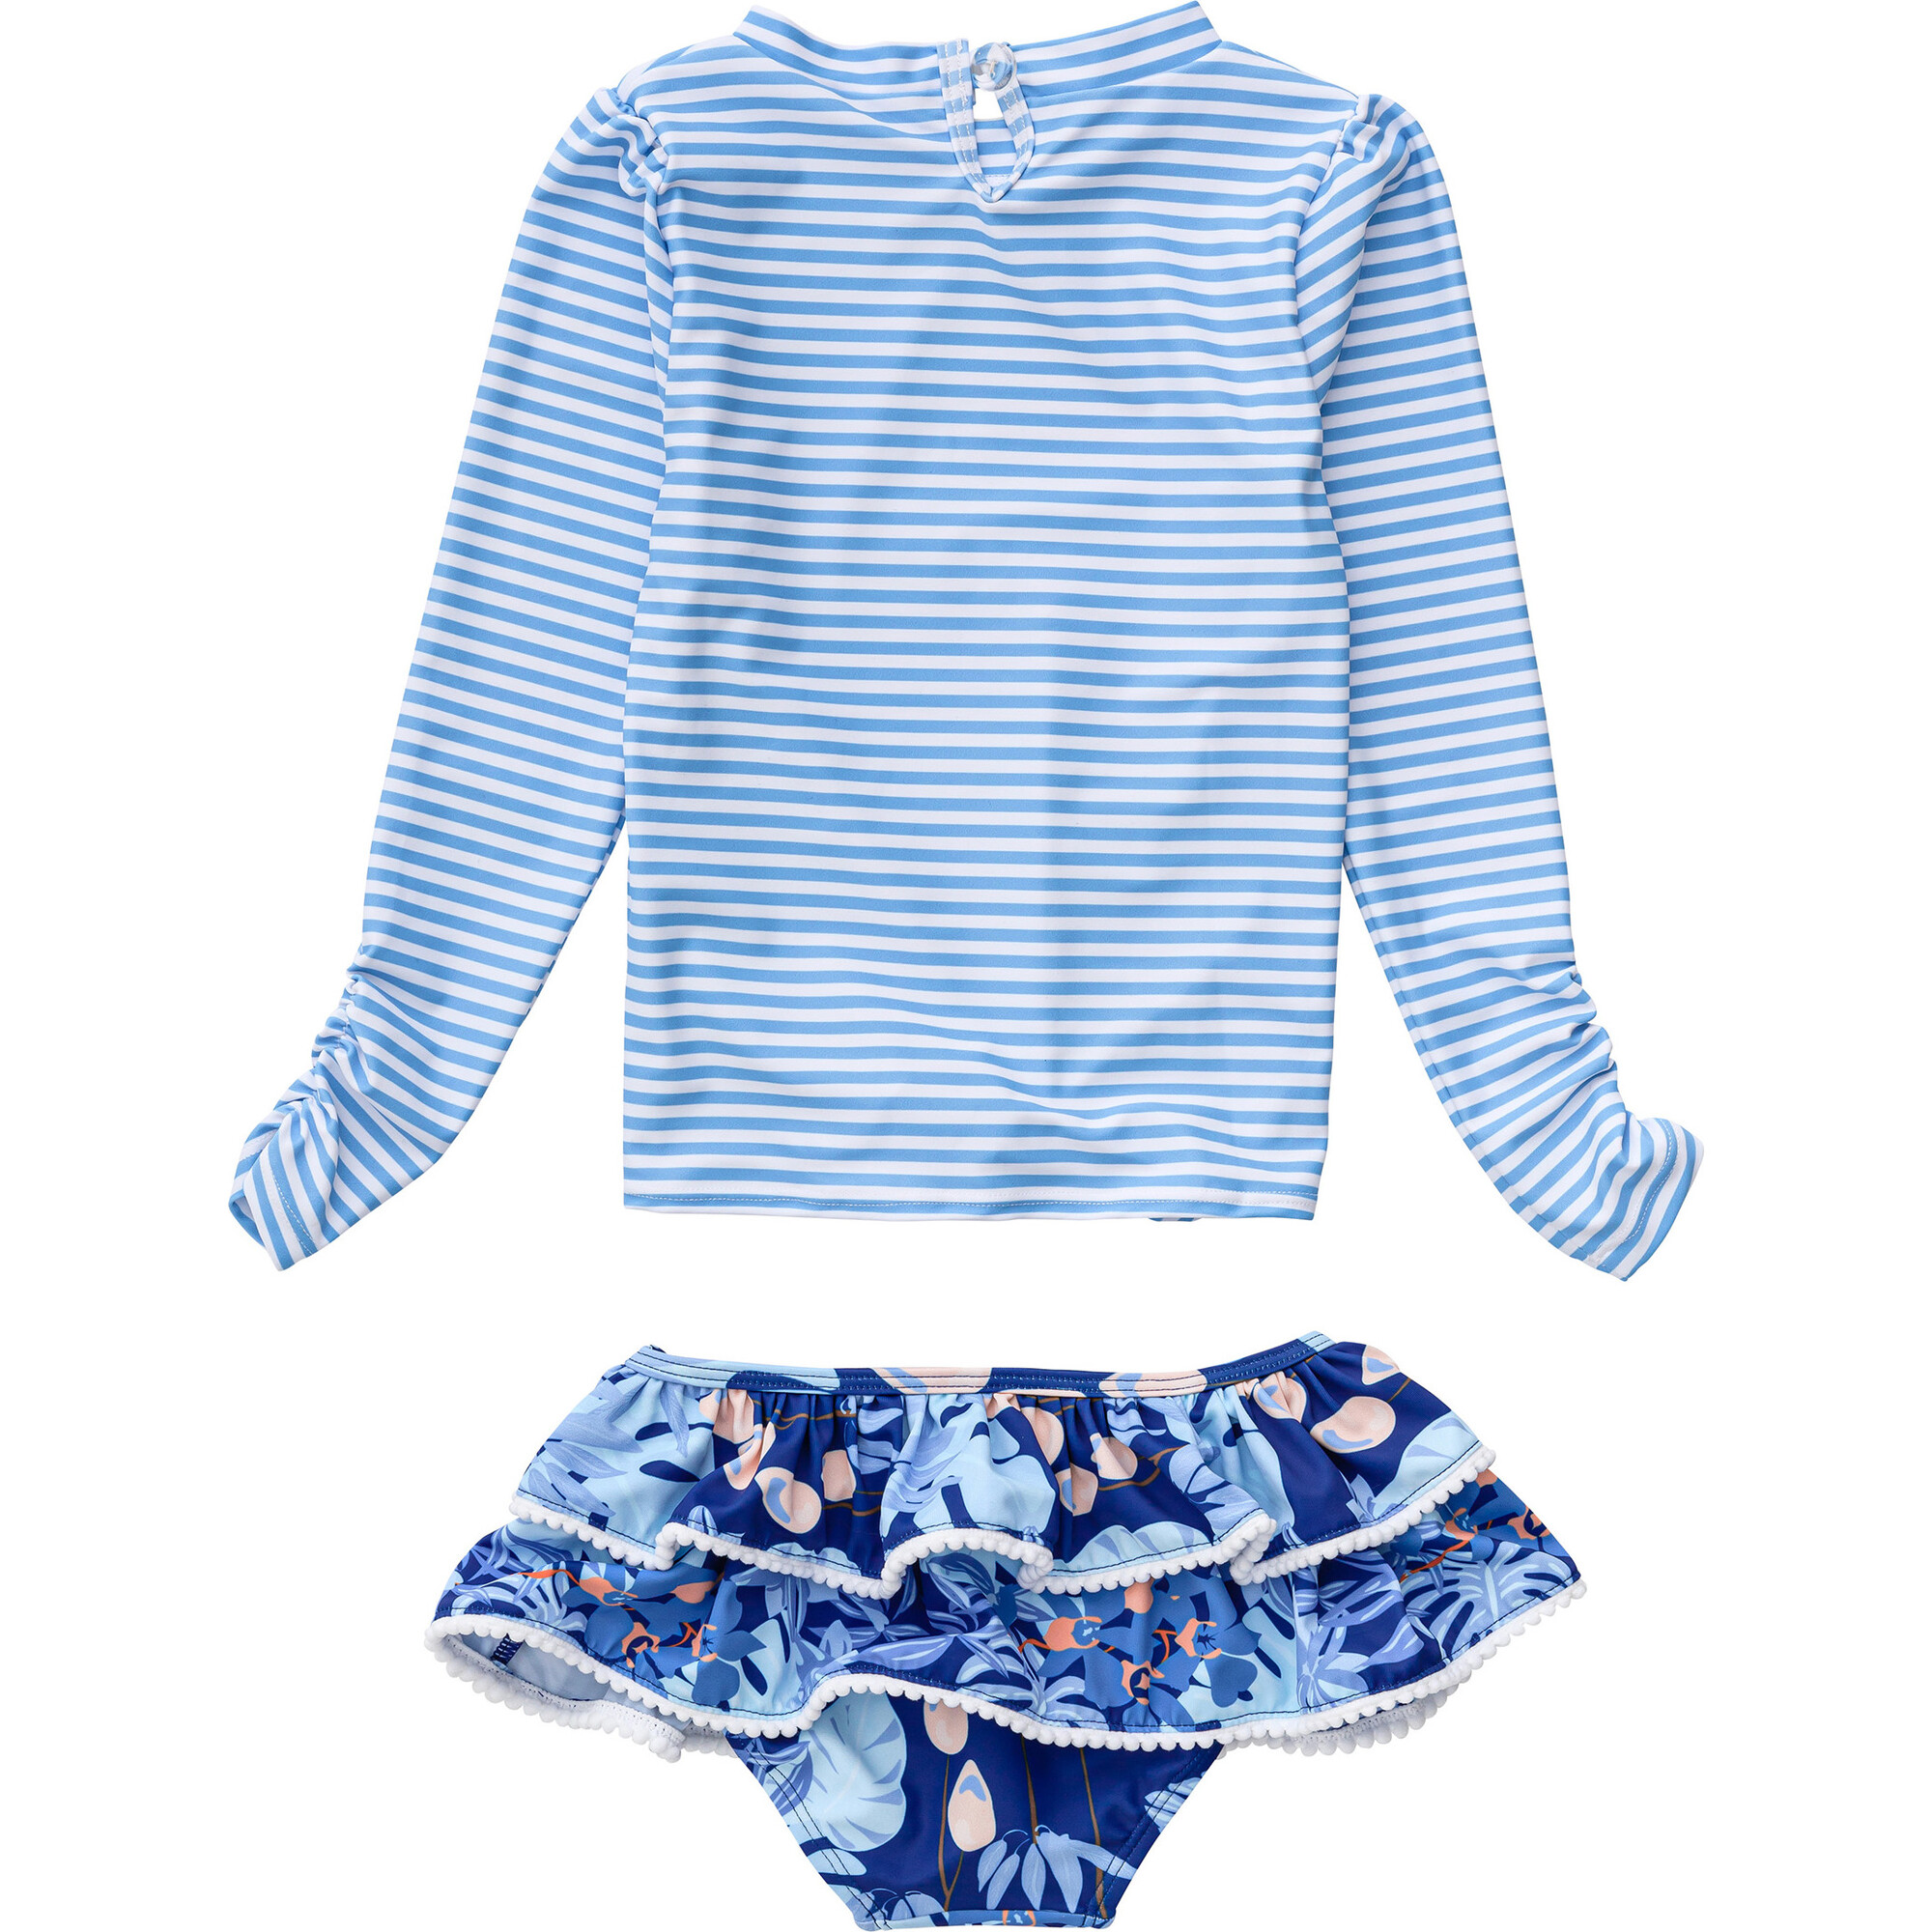 NWT LC Lauren Conrad Ruffle Swing Top Blue & White Stripe Plus Size 1X